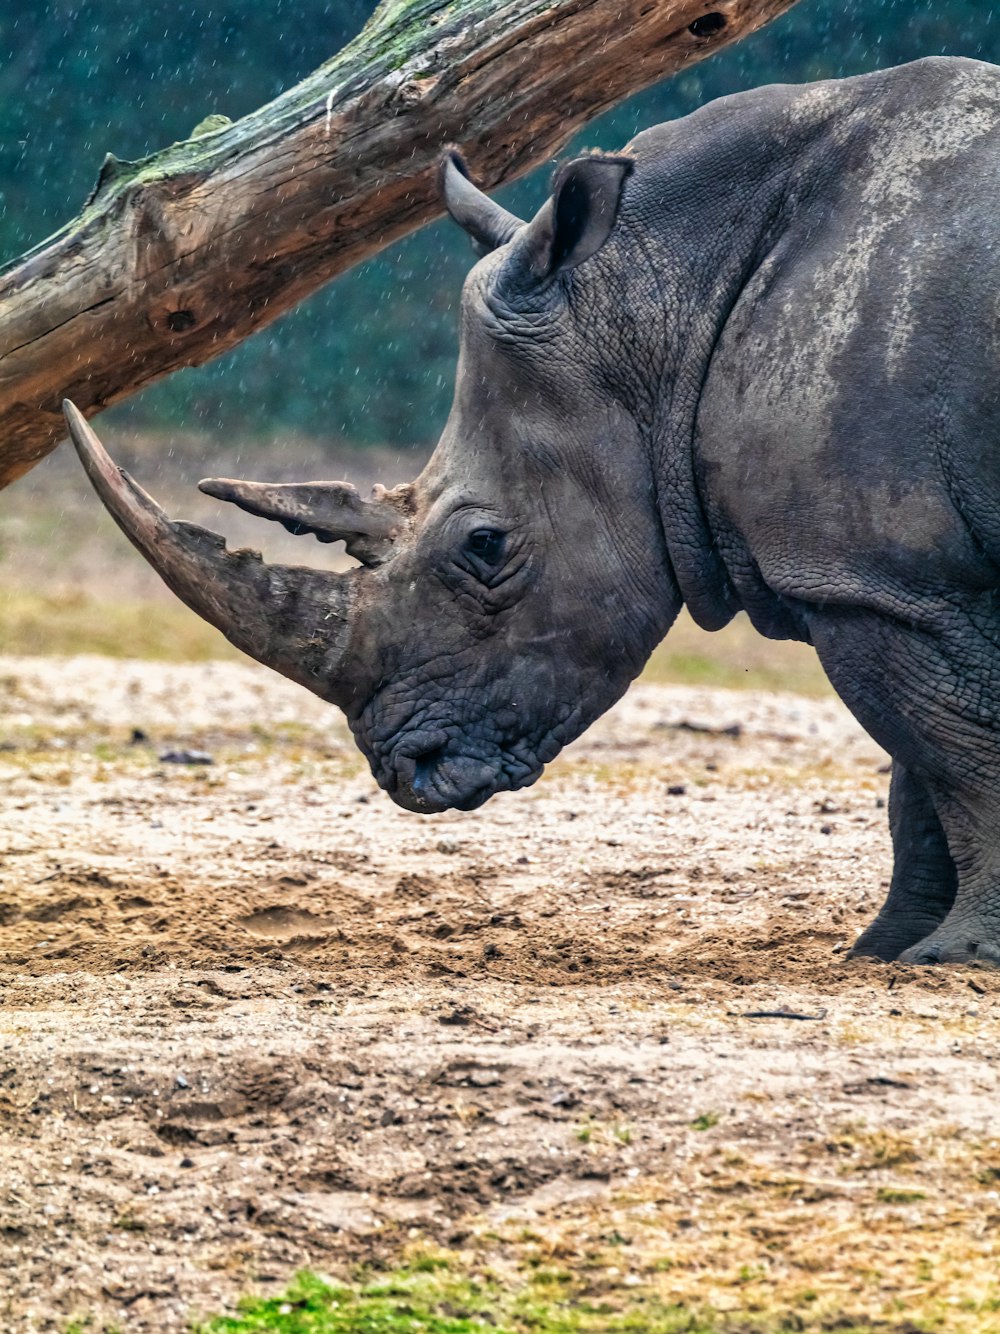 a rhinoceros standing on dirt